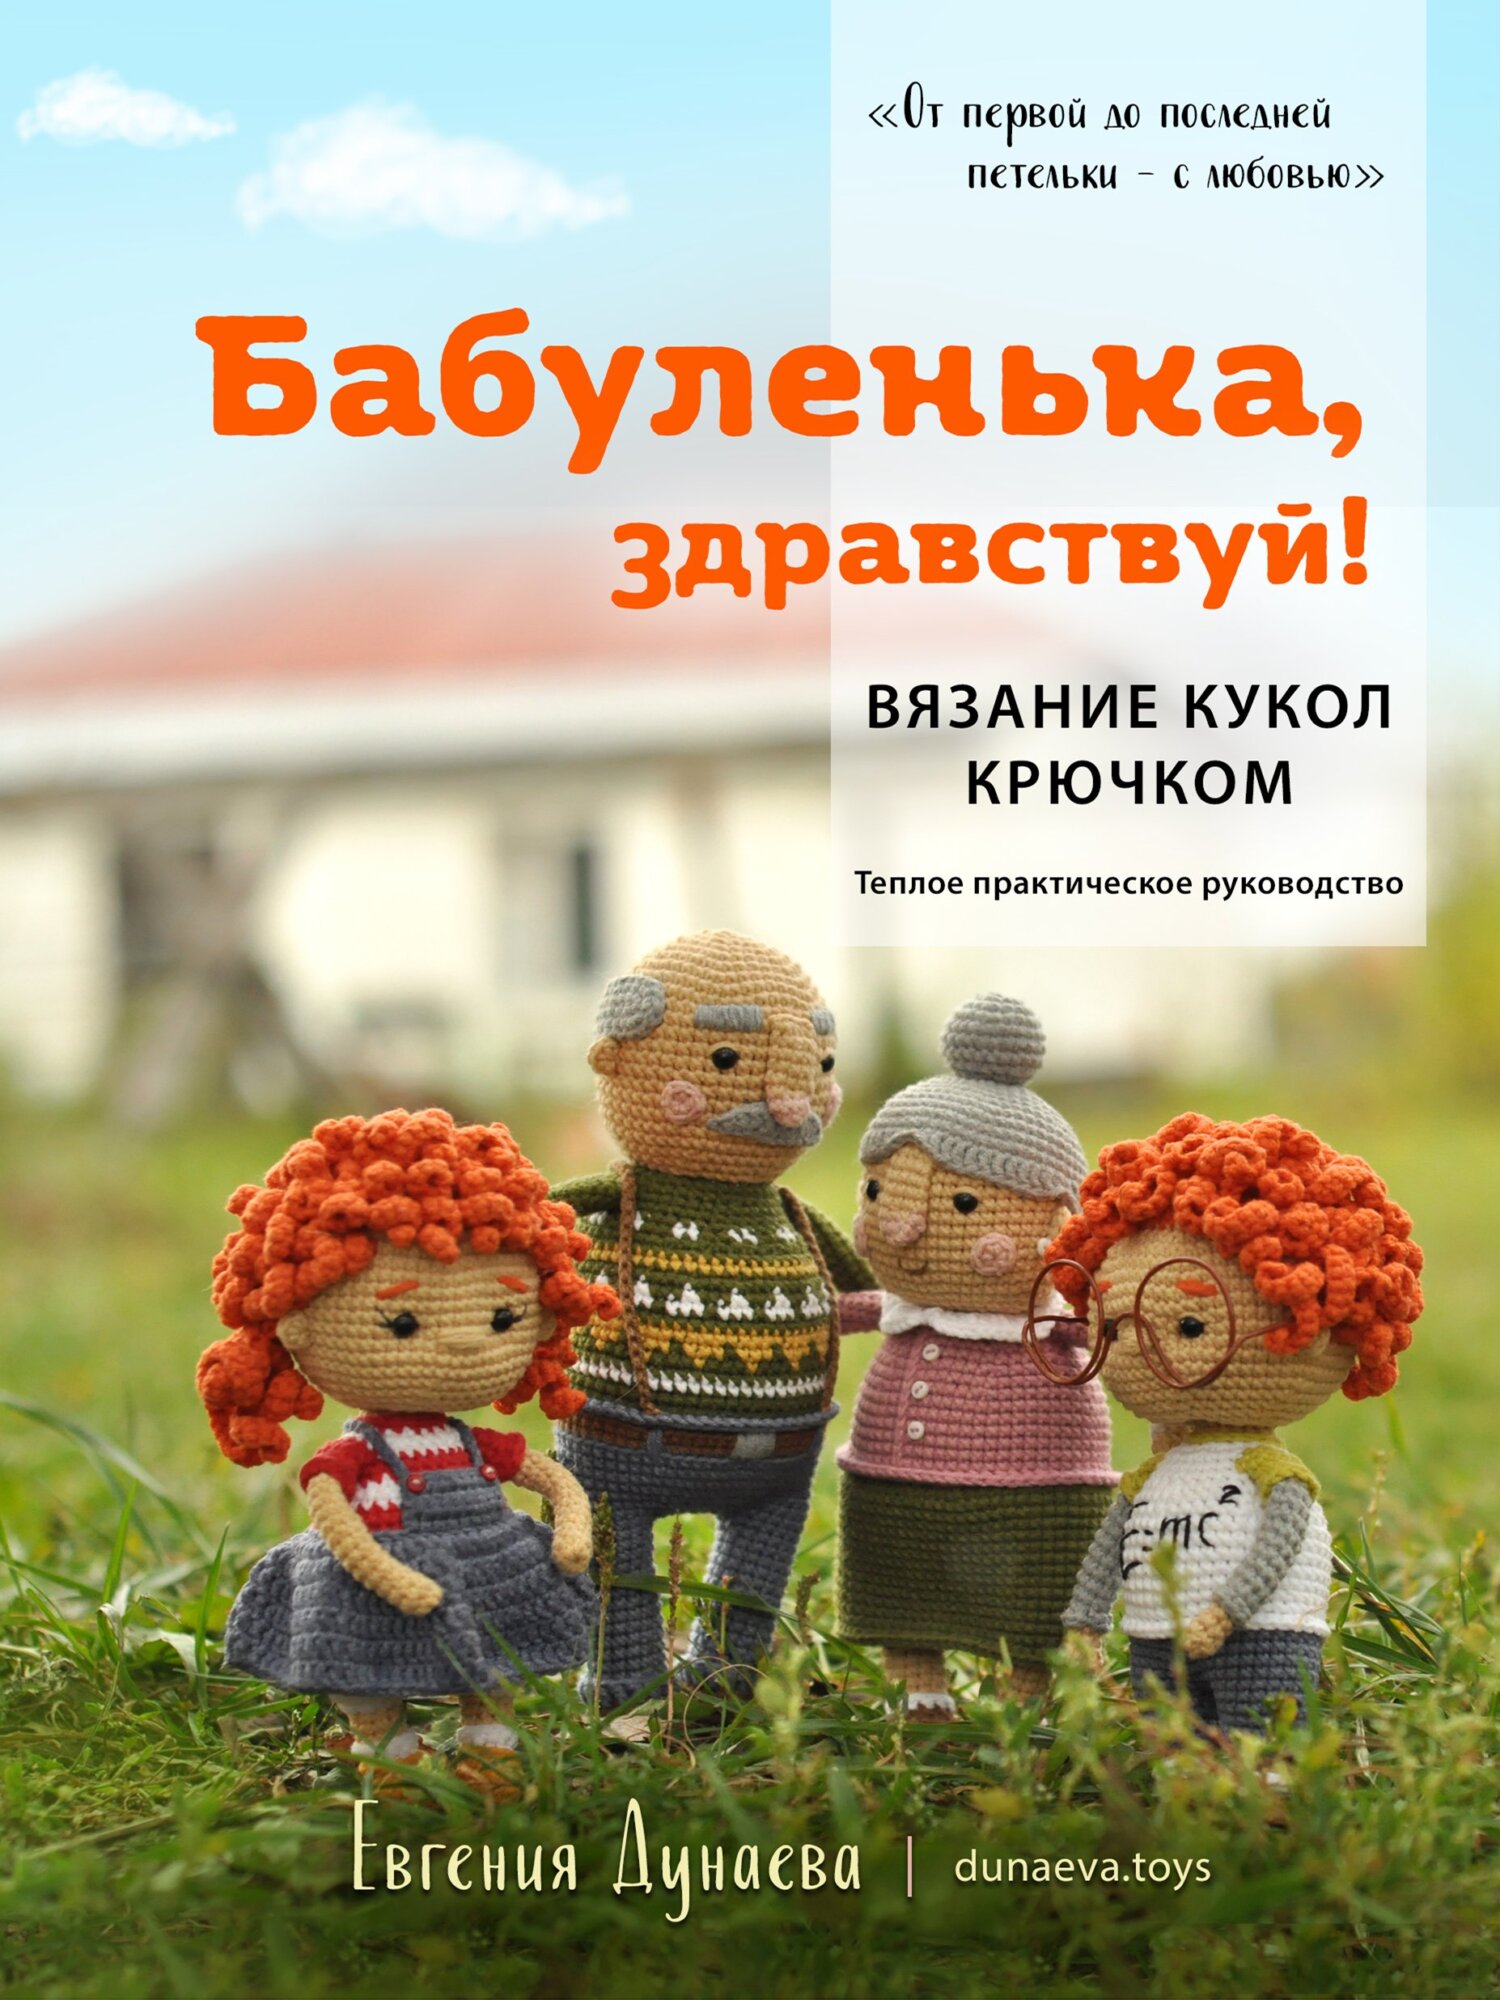 Самарский театр кукол - Администрация